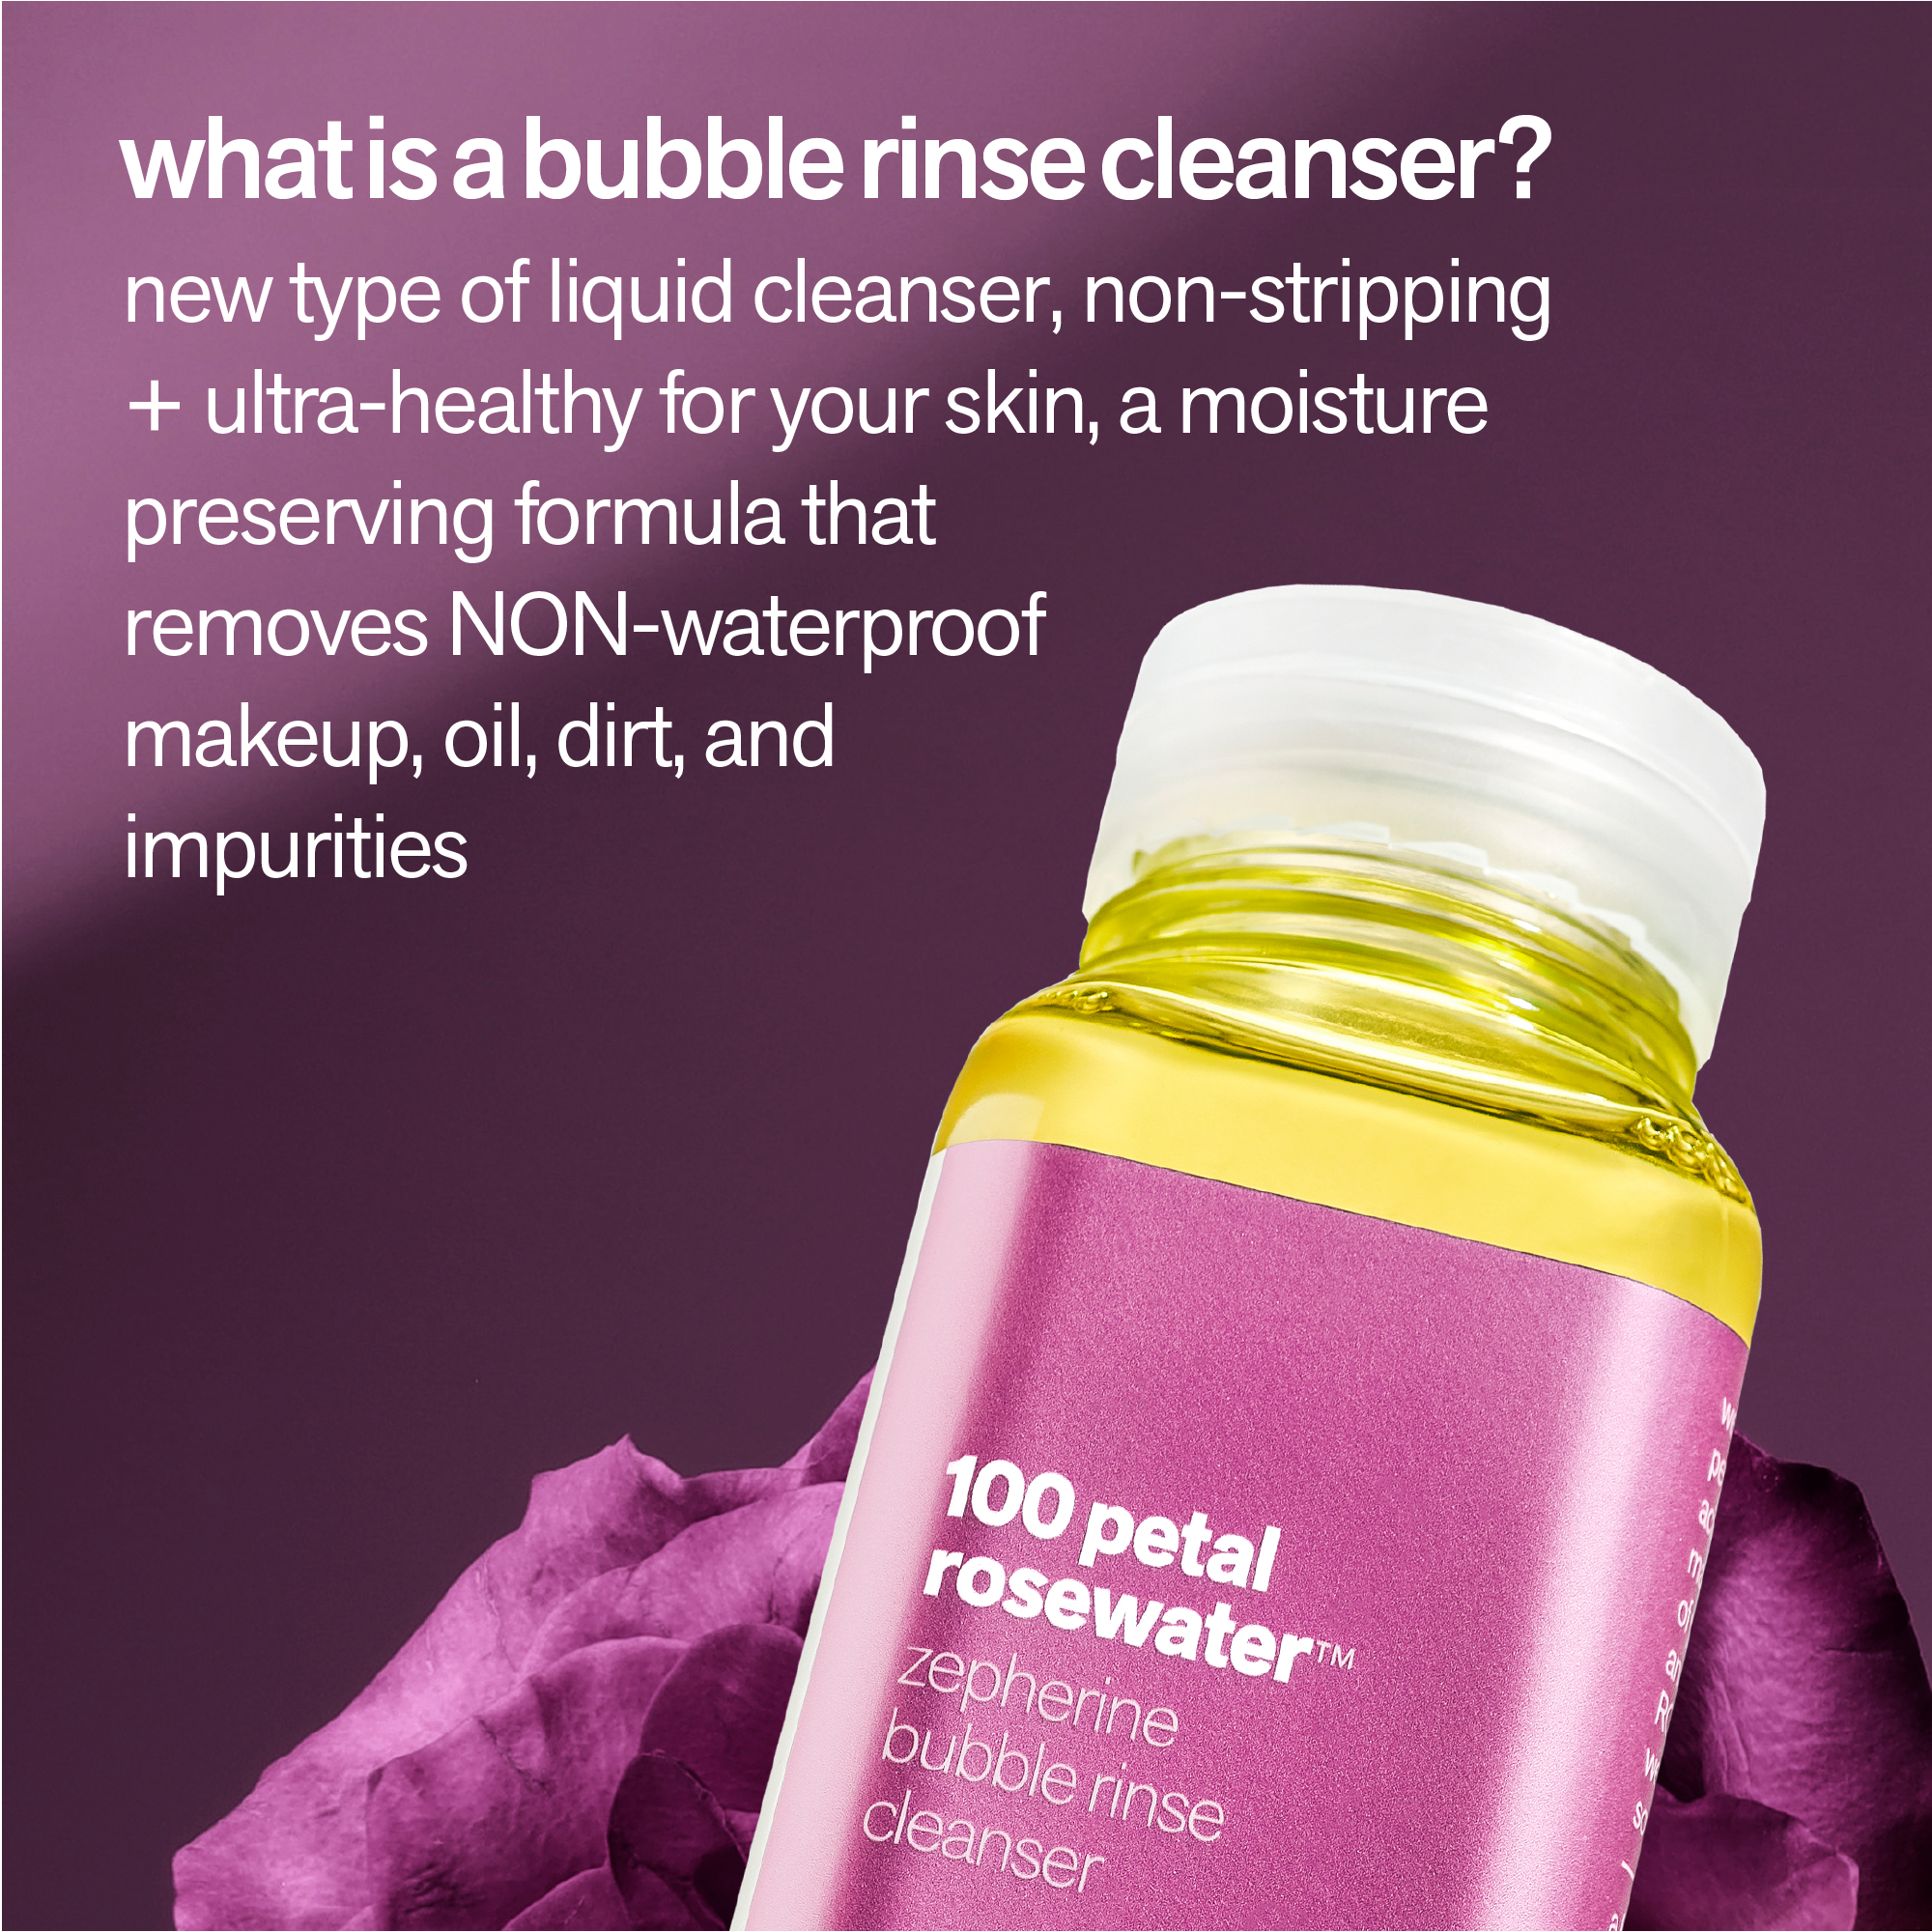 100 Petal Rosewater Zepherine Bubble Rinse Cleanser